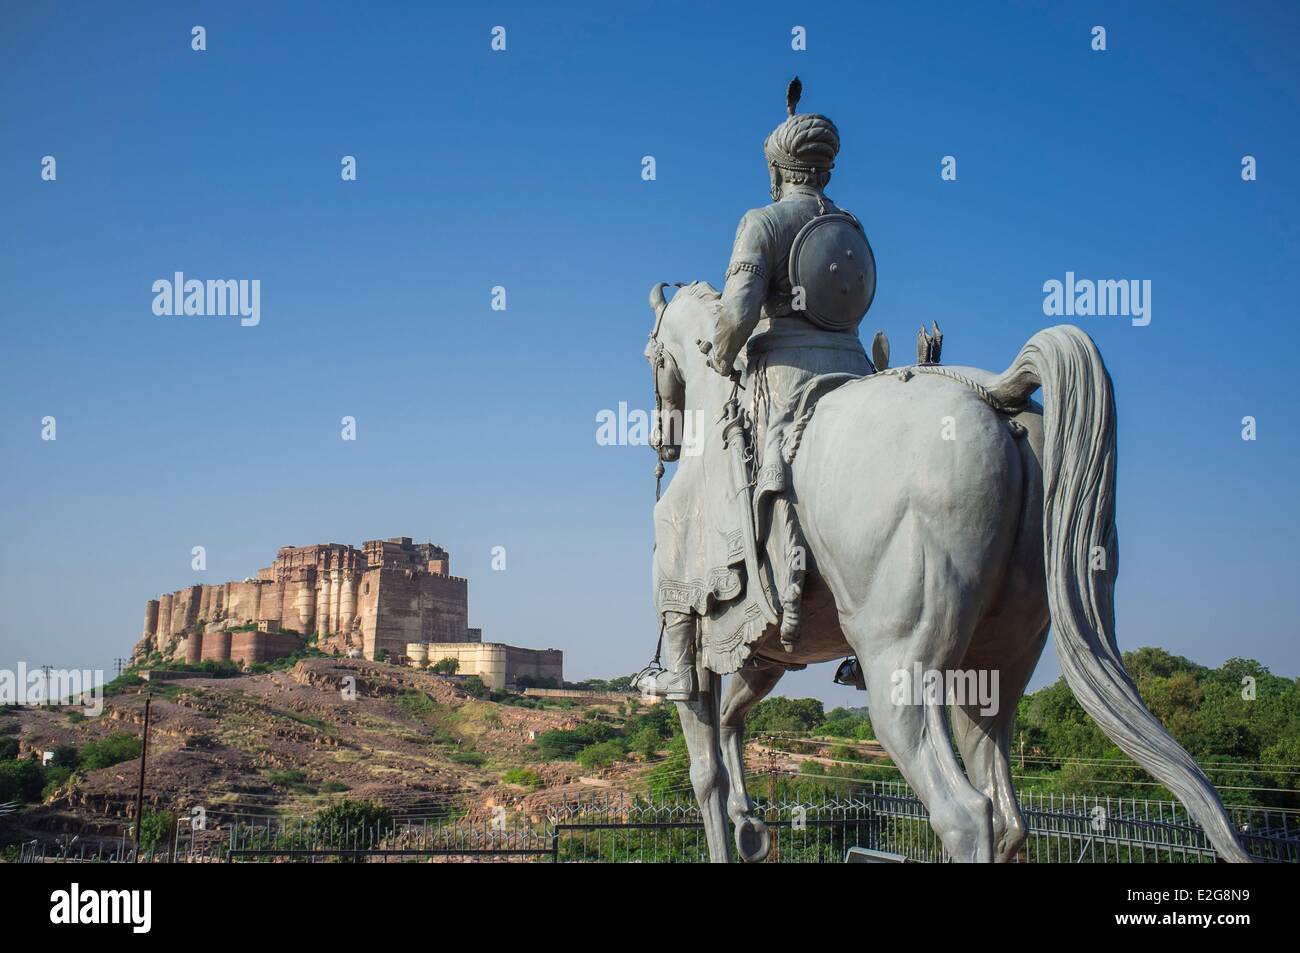 India Rajasthan Jodhpur statua equestre di Rao Jodha Ji fondatore di Jodhpur e Forte Mehrangarh in background Foto Stock